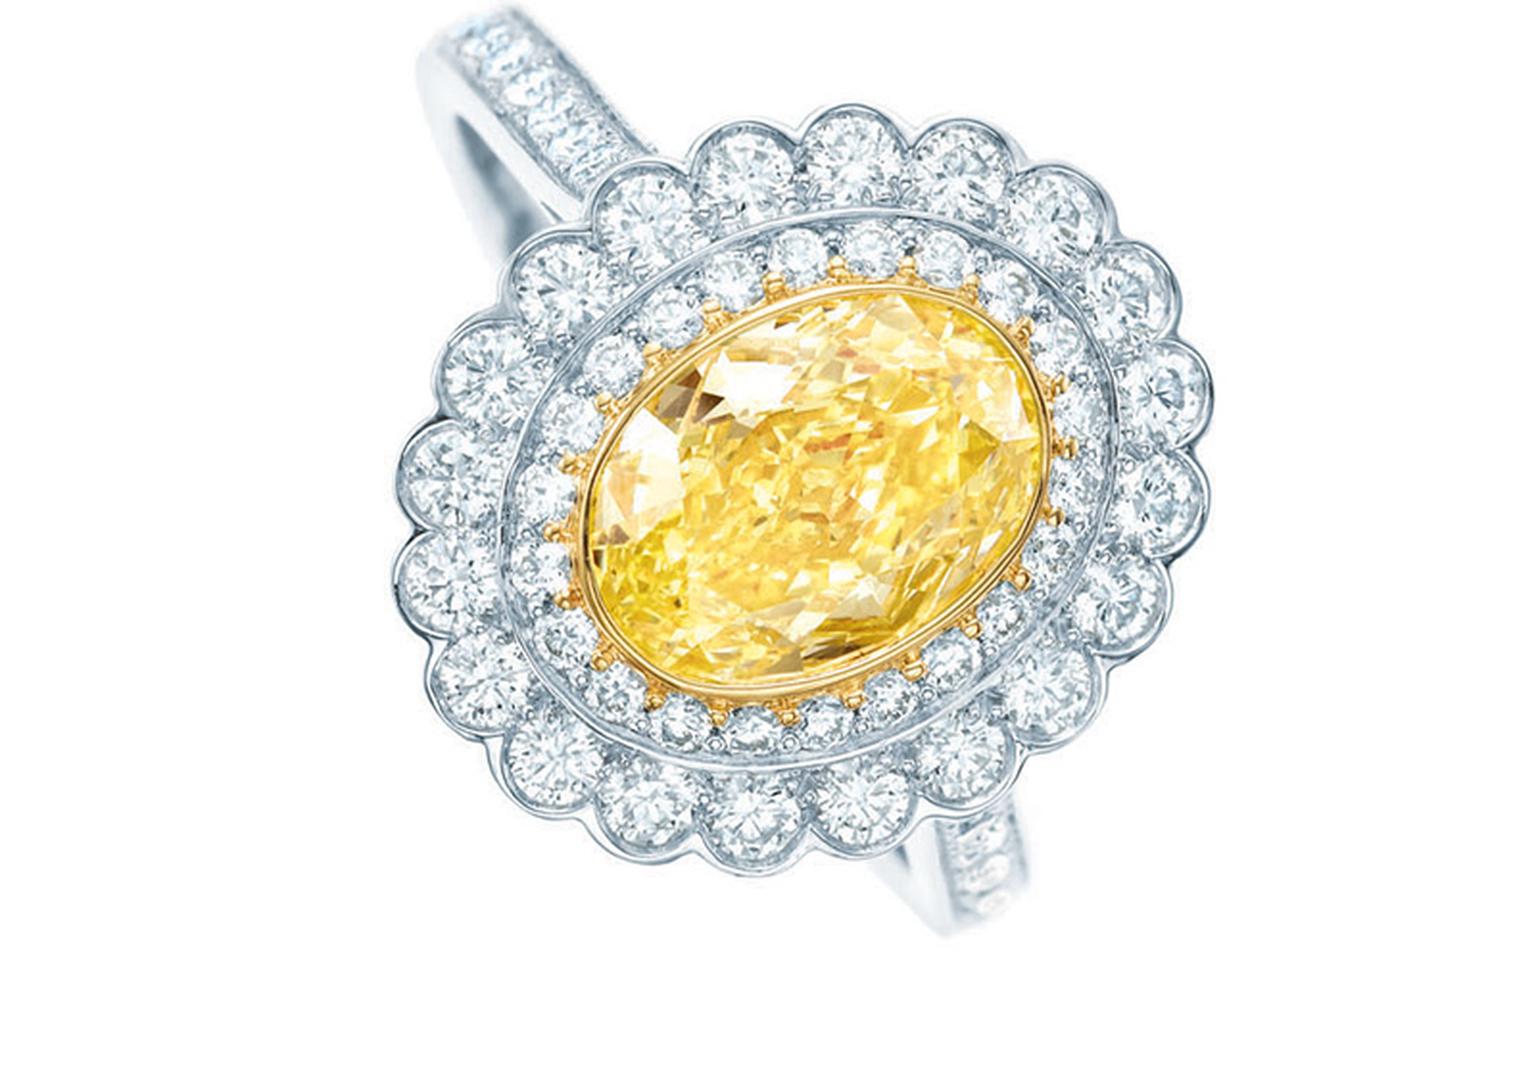 Tiffany-Enchant-yellow-and-white-diamond-rings-set-in-platinum2.jpg